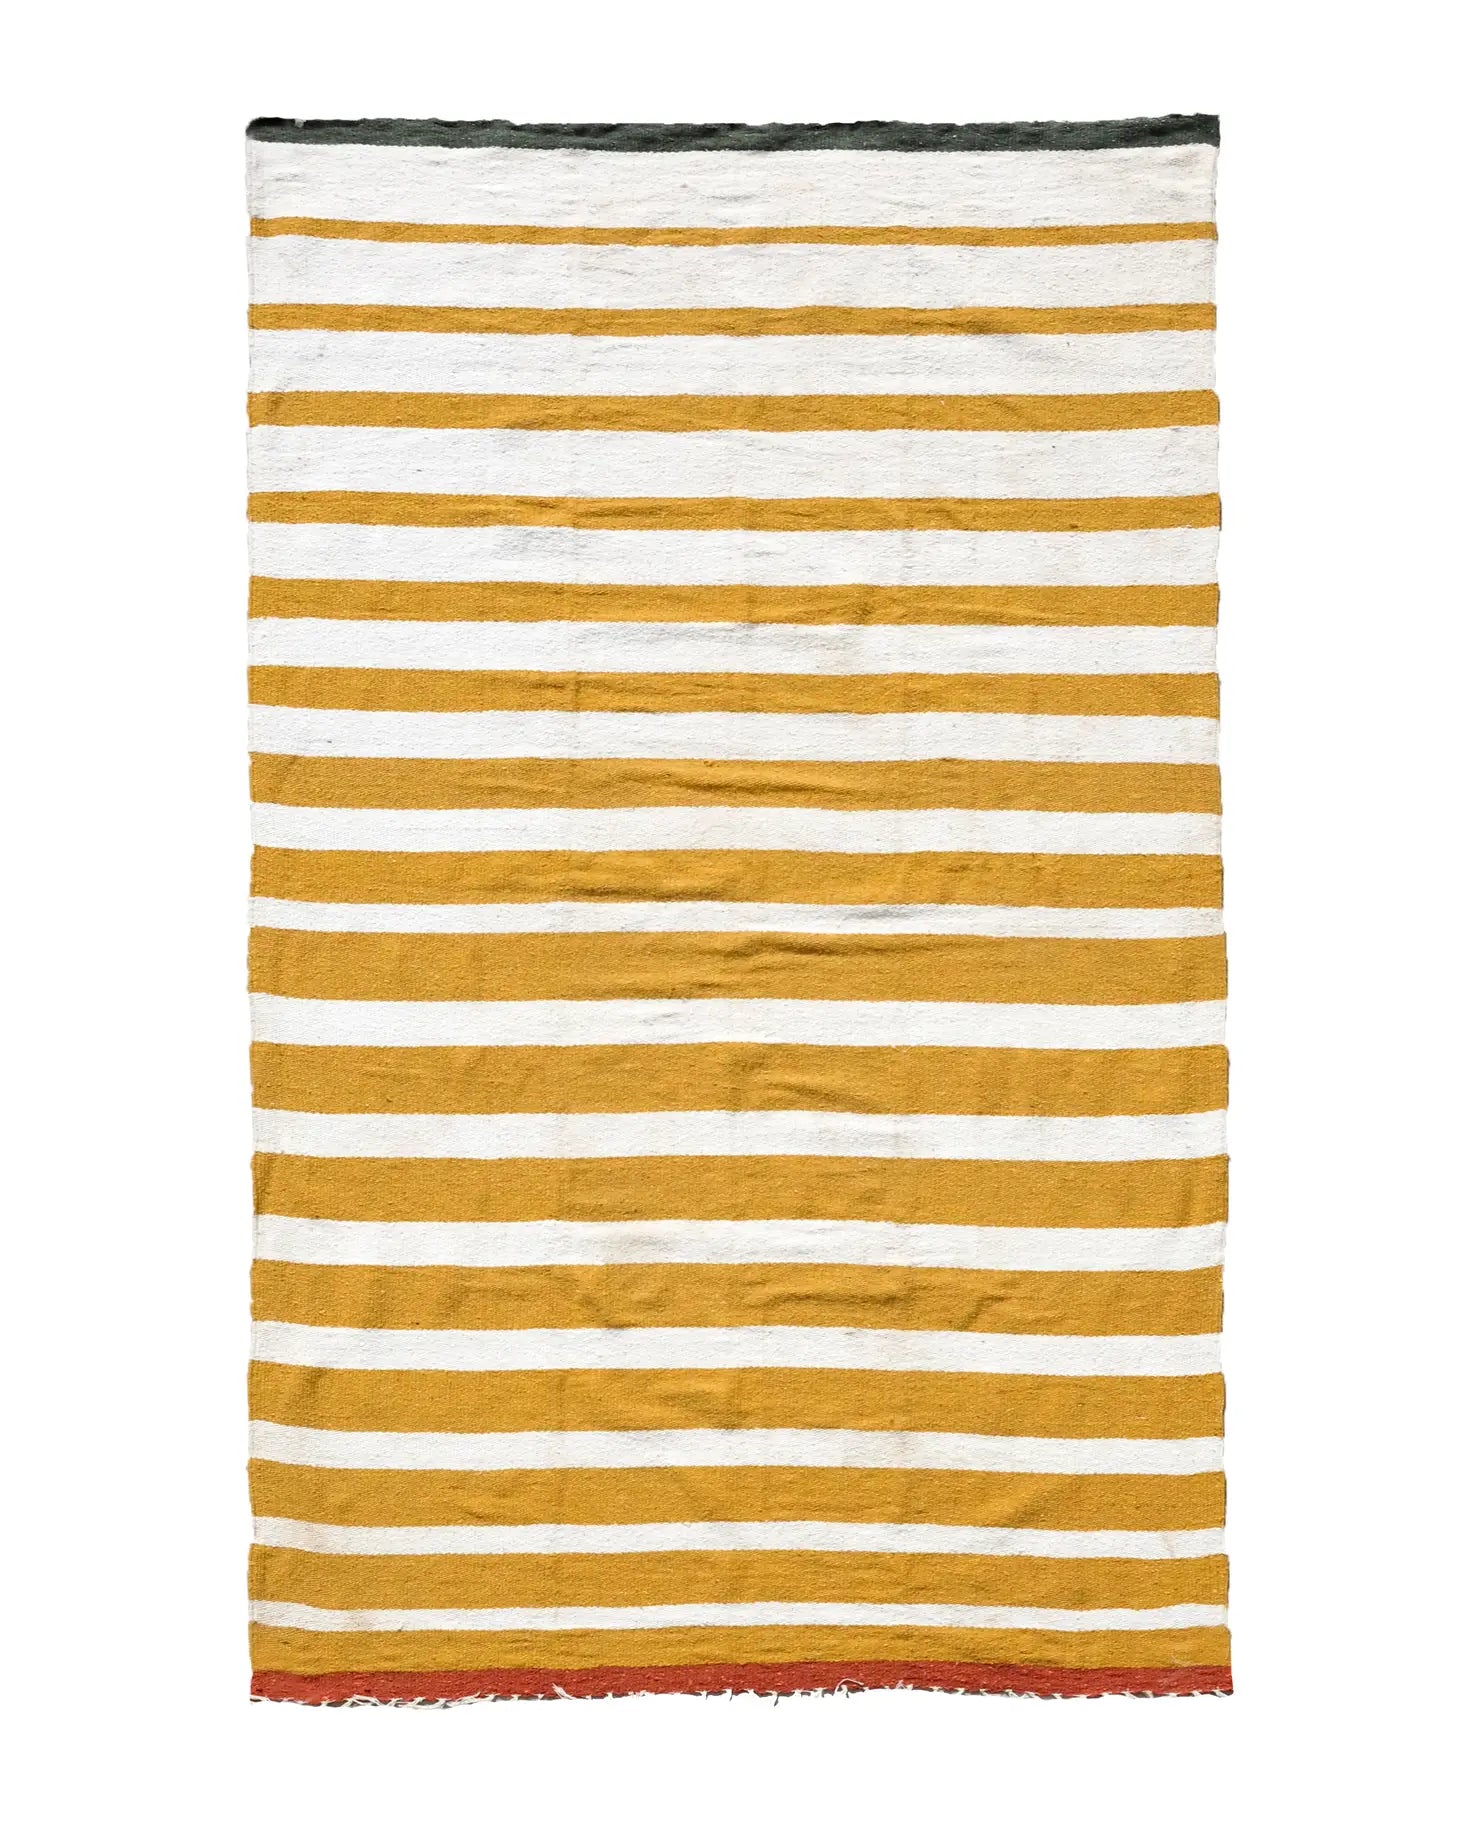 Marea Sol - Blanket Roll